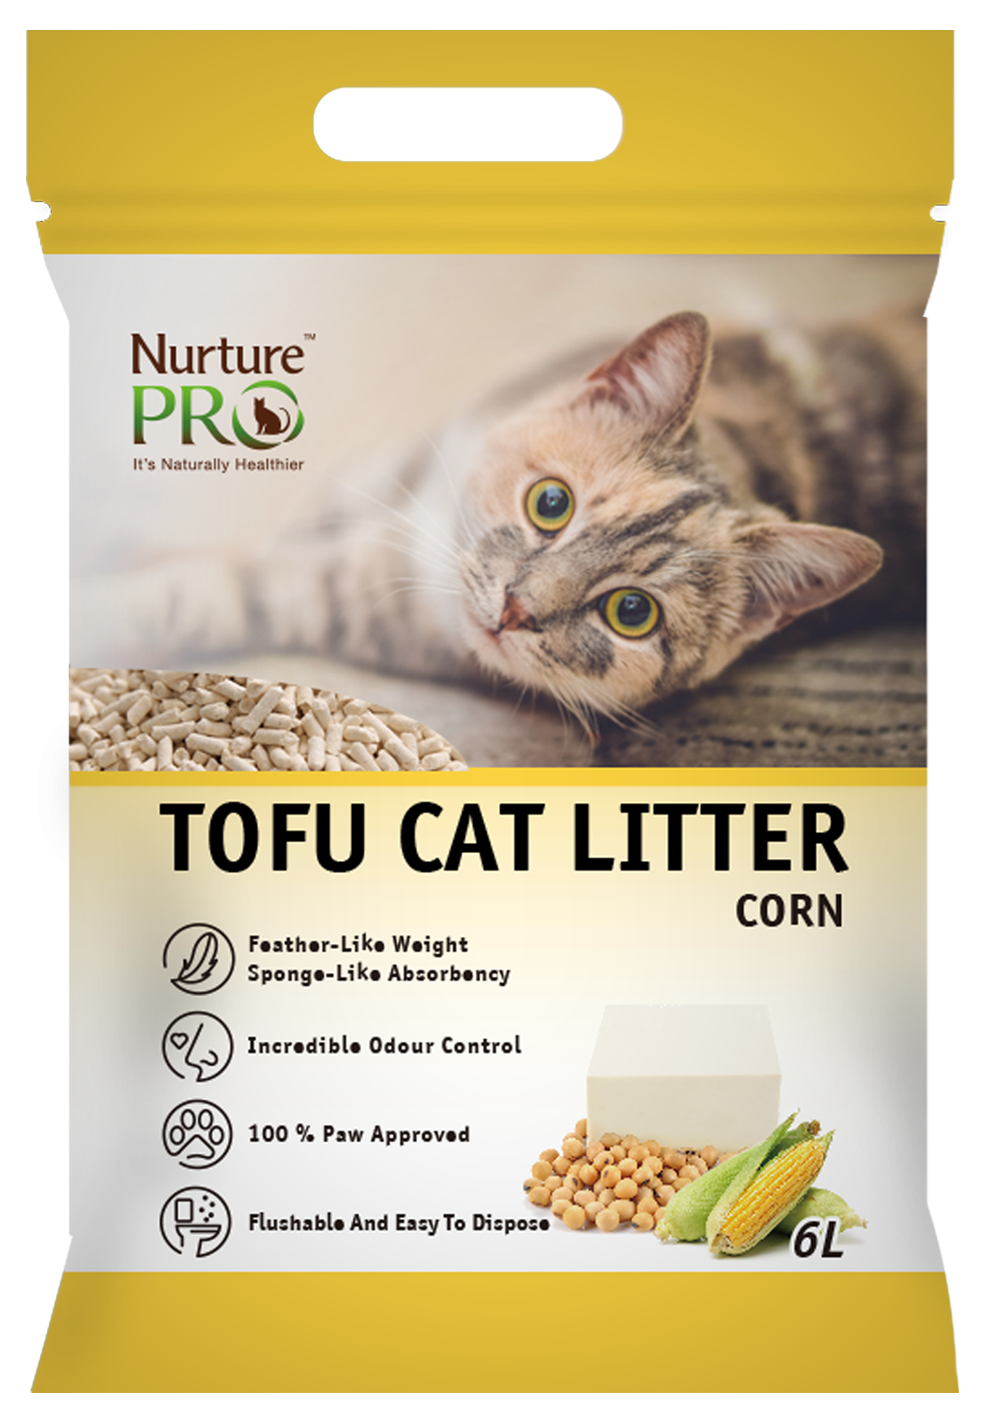 Nuture Pro - Tofu Cat Litter Corn